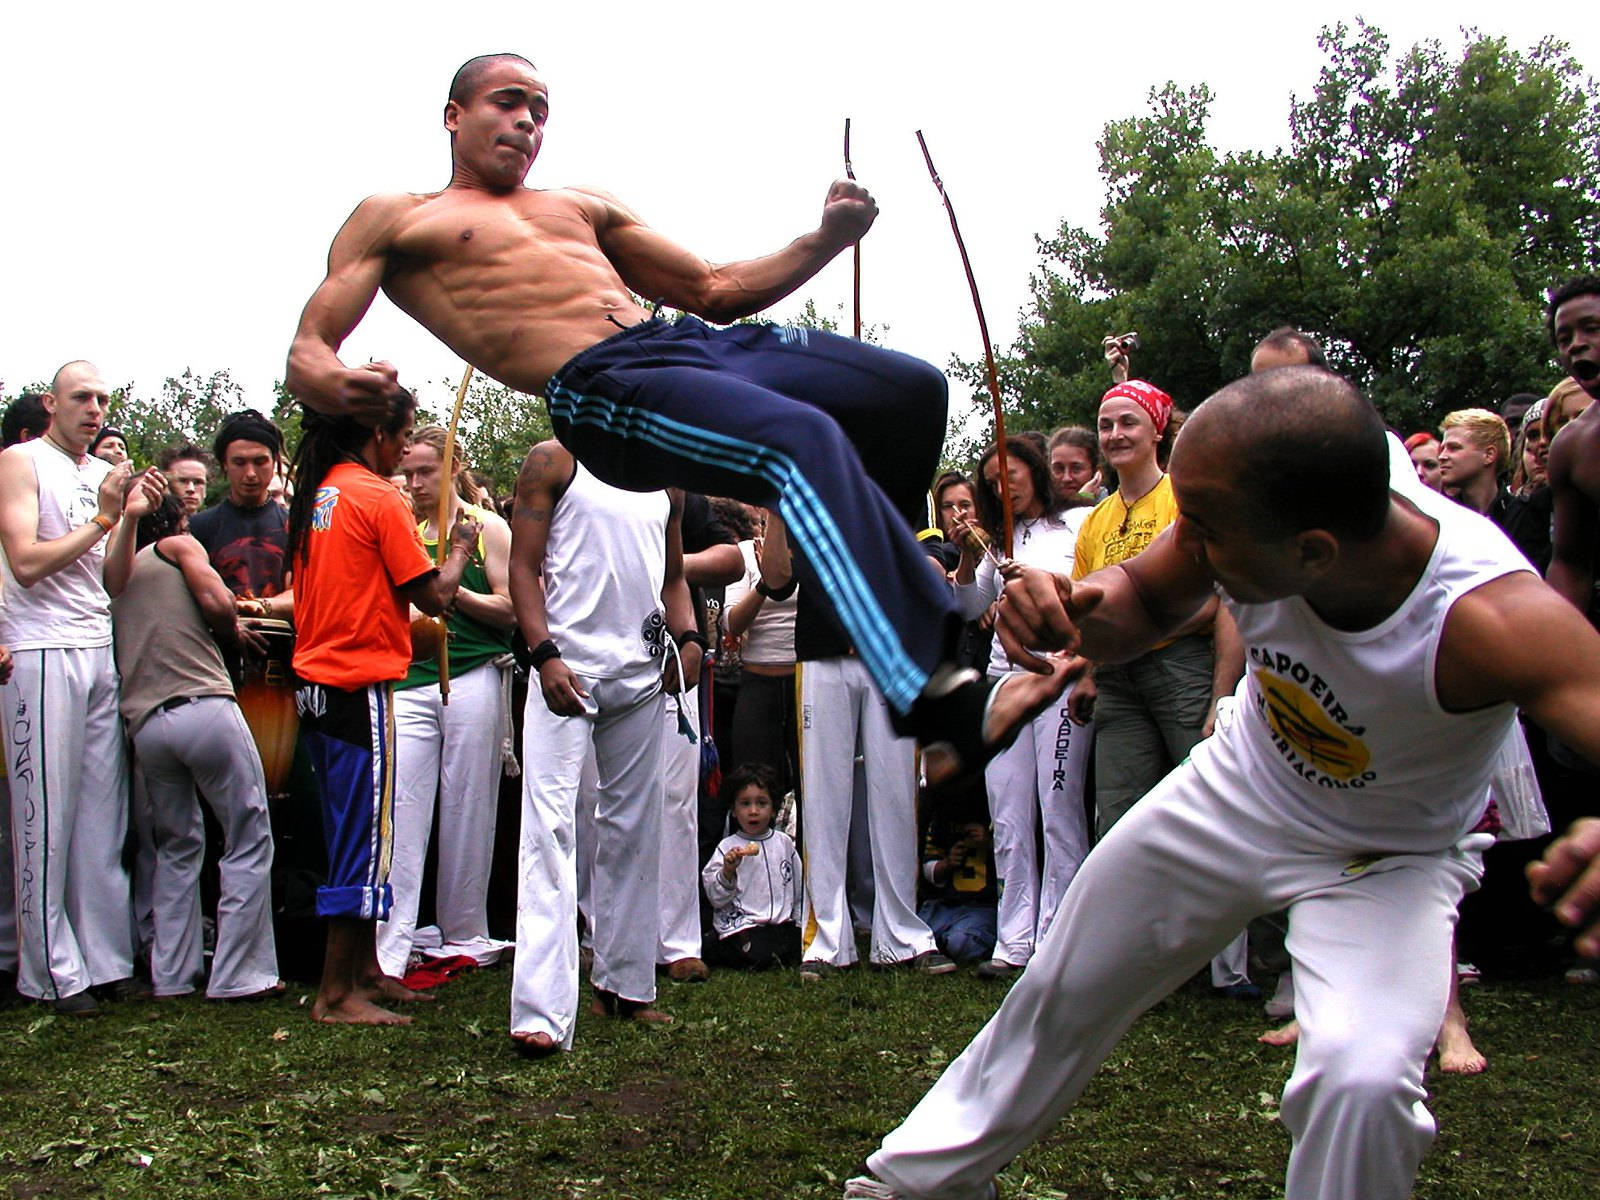 Capoeirapå Parken. Wallpaper